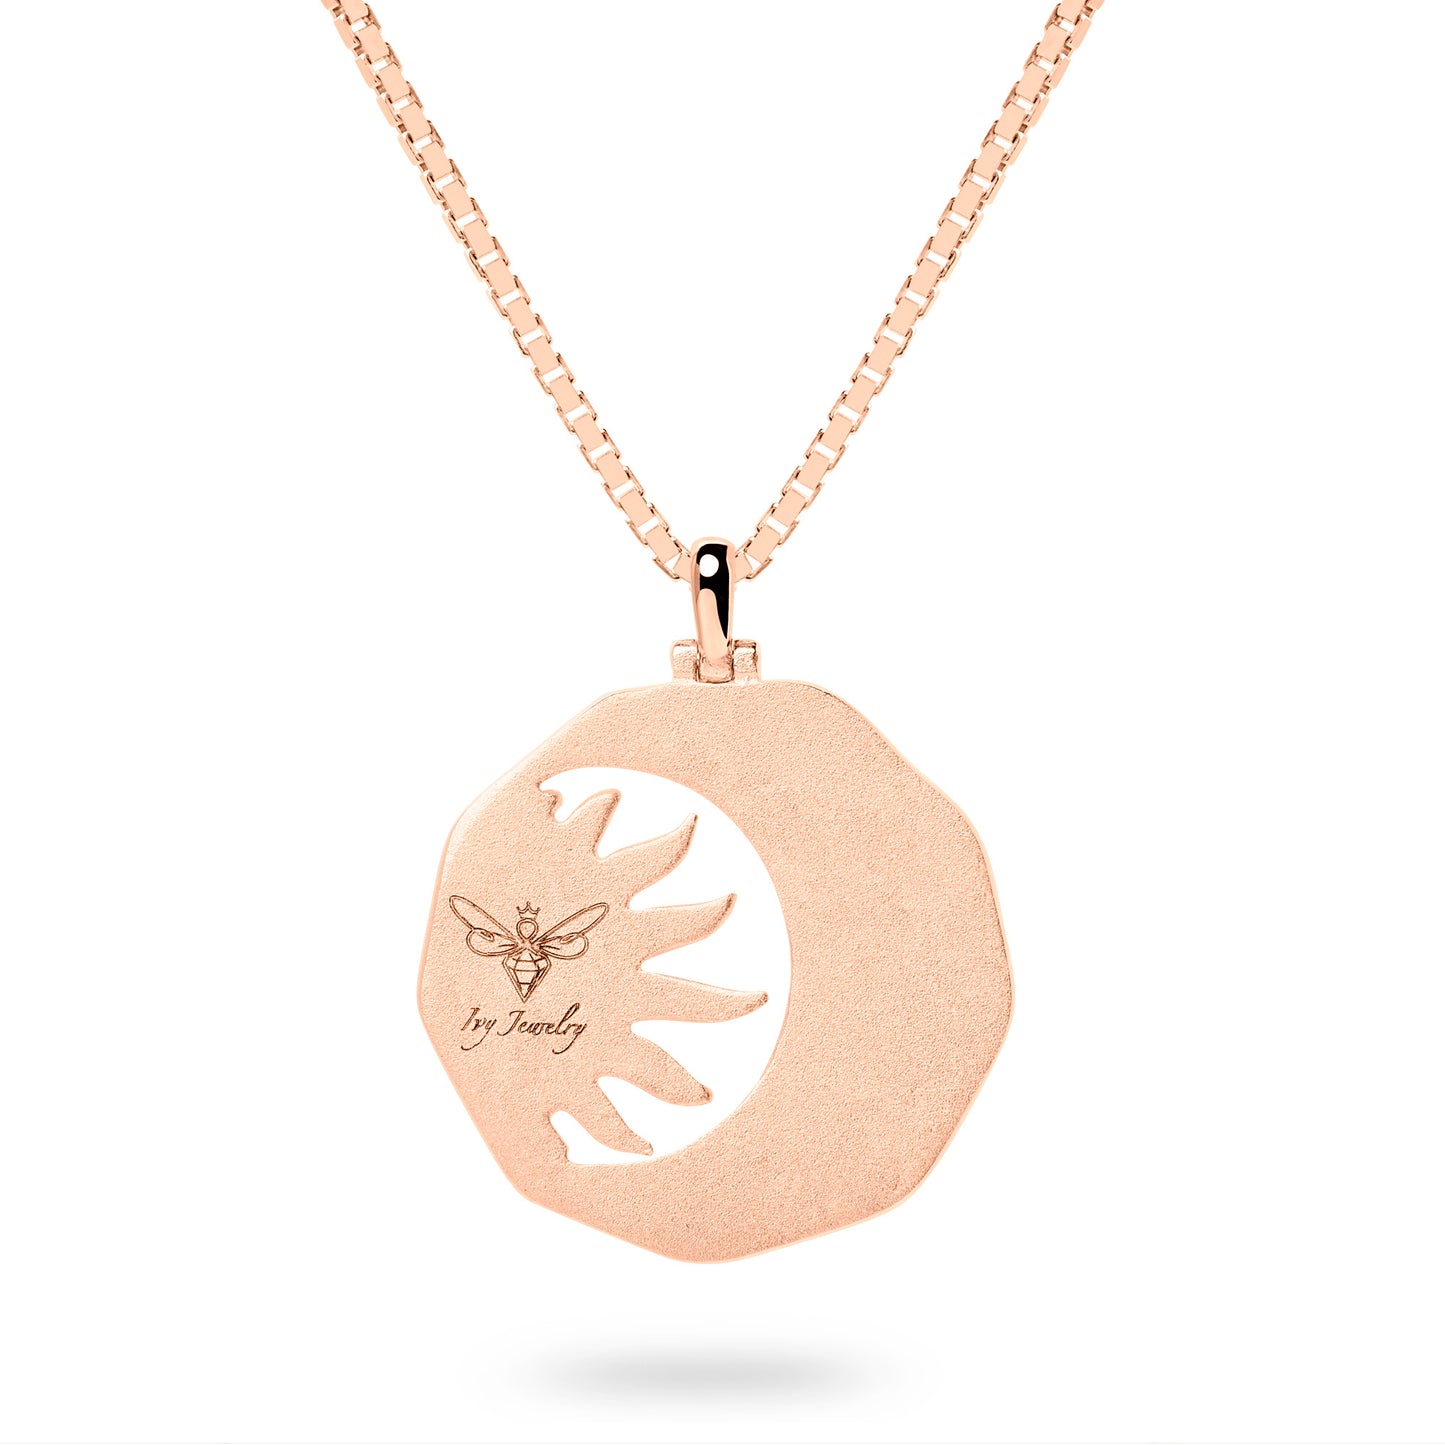 Diamond “Sun and Moon” Pendant Necklace (Gold)